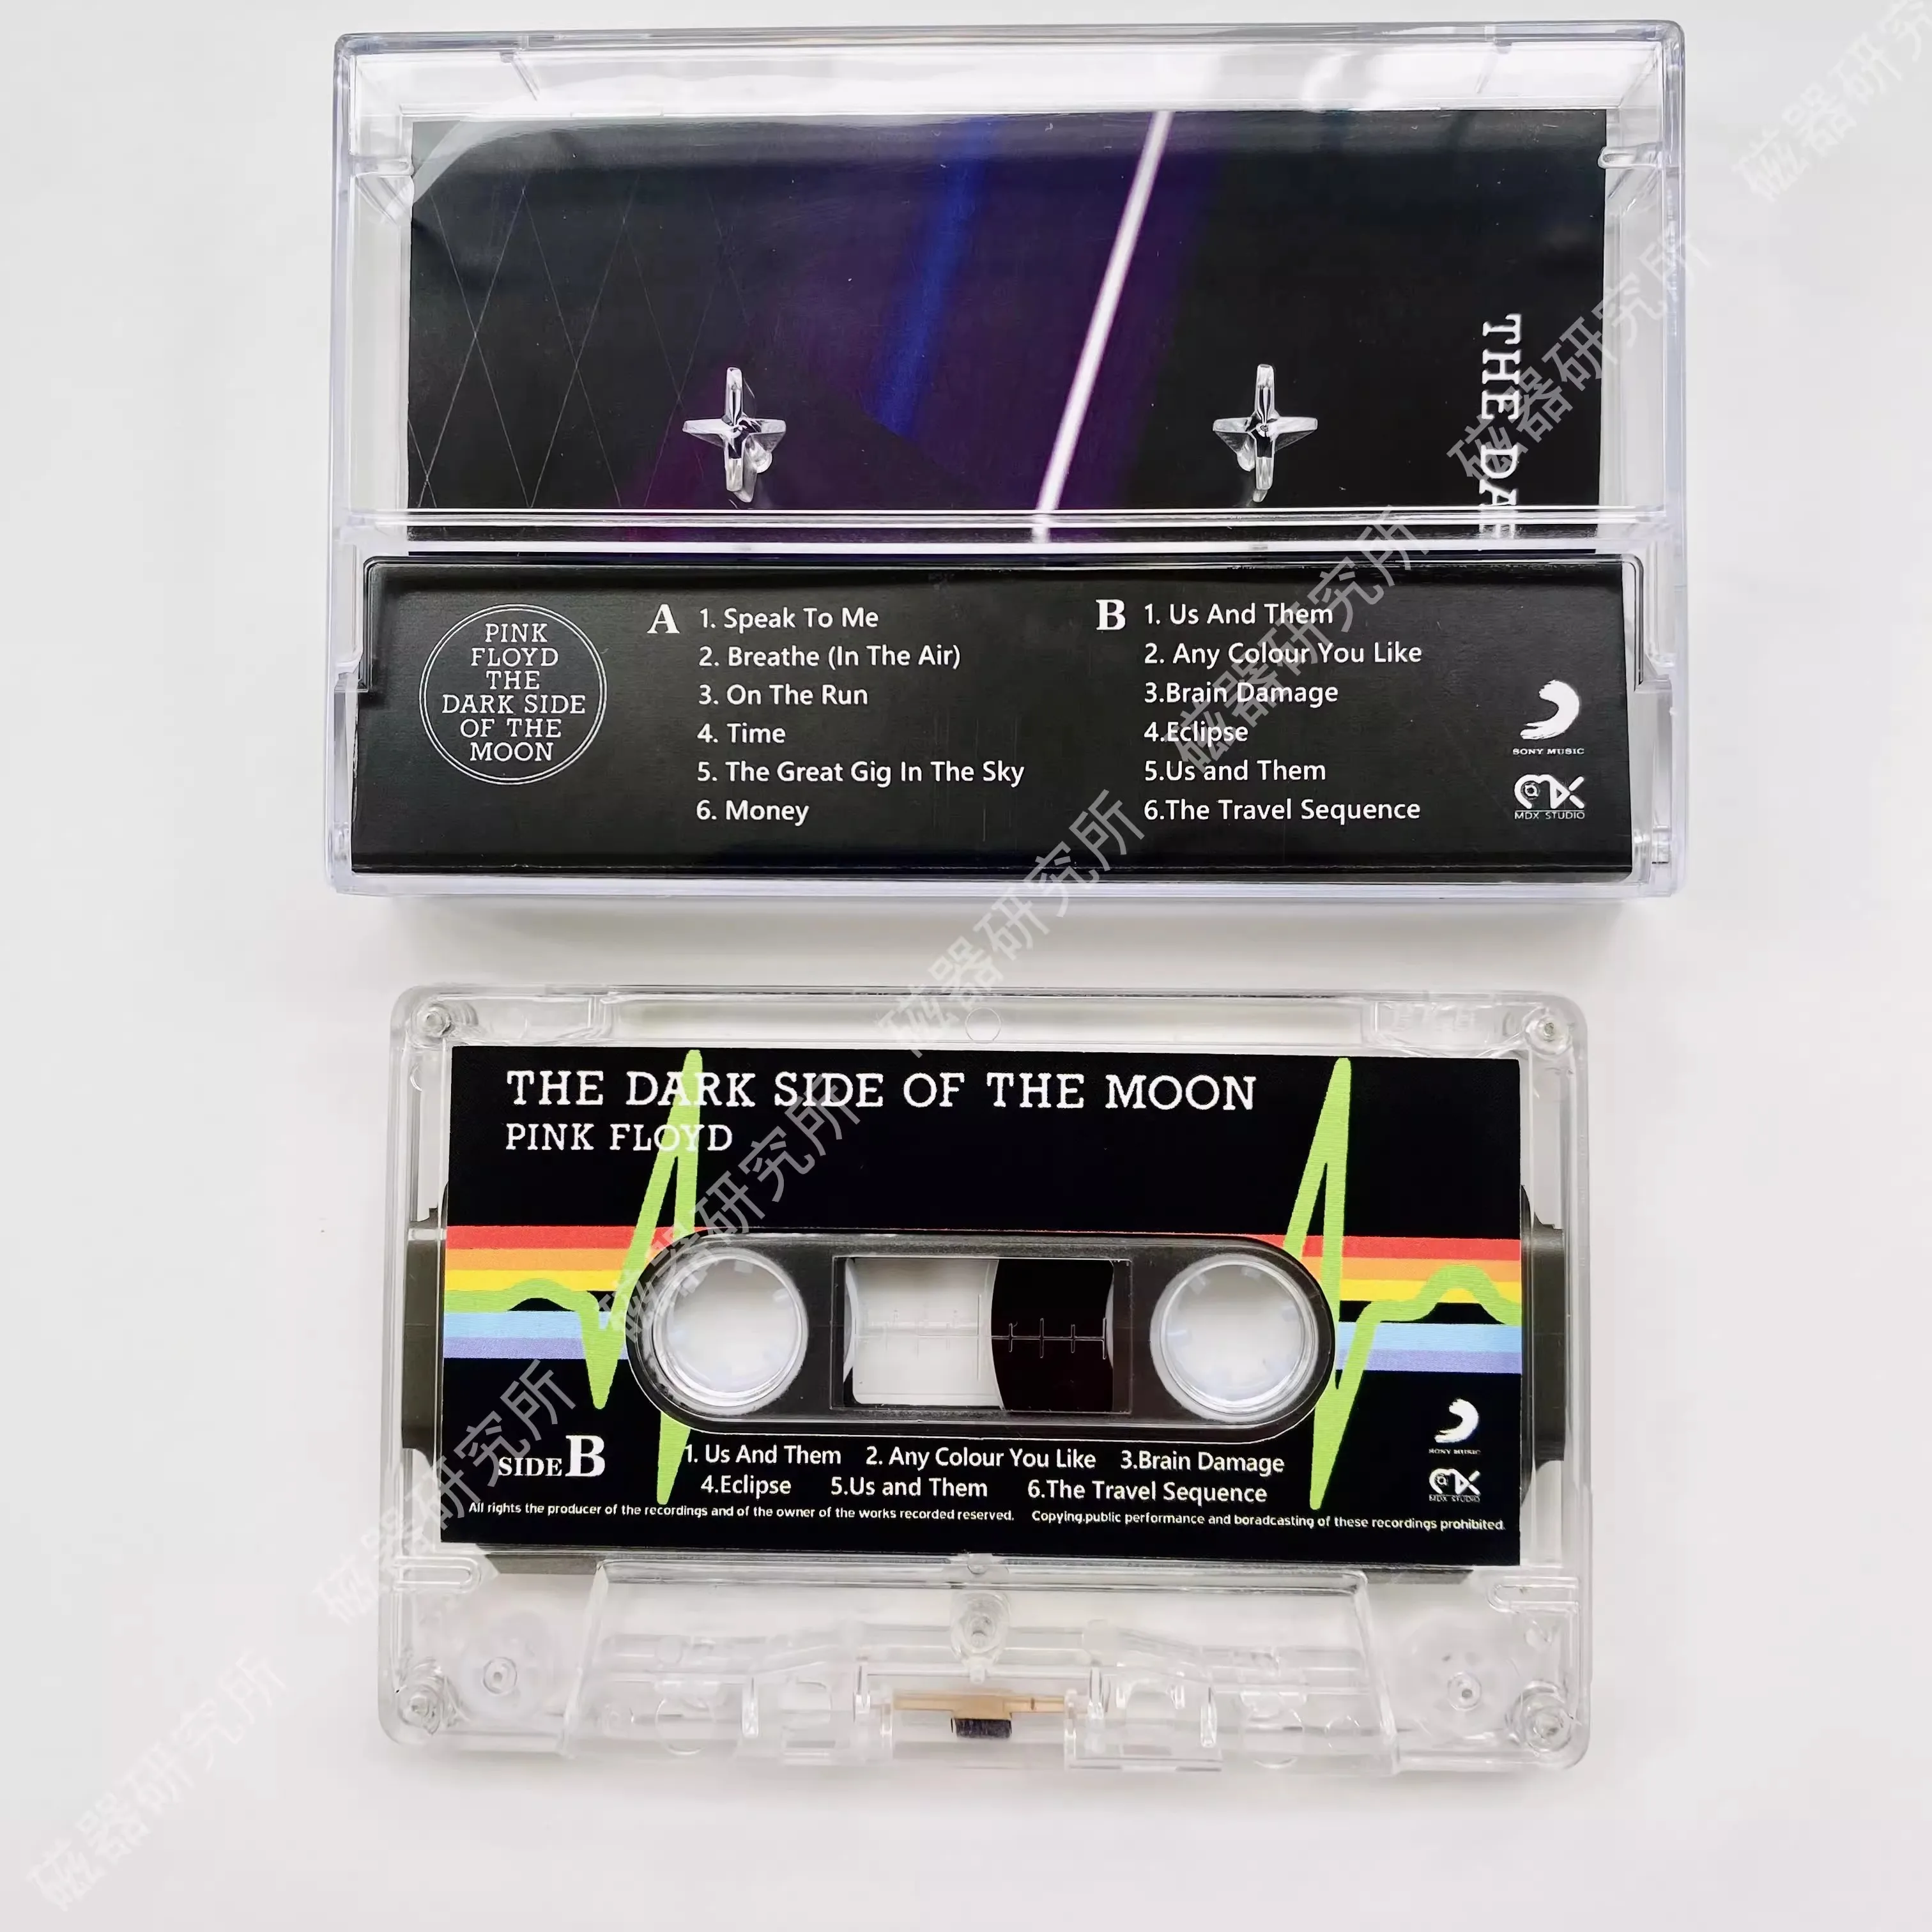 https://ae01.alicdn.com/kf/S069cc67de6864dbfb3a6eb6718e9db94J/New-Pink-Floyd-Music-Tape-The-Dark-Side-of-the-Moon-Album-Cassette-Cosplay-Soundtracks-Box.jpg